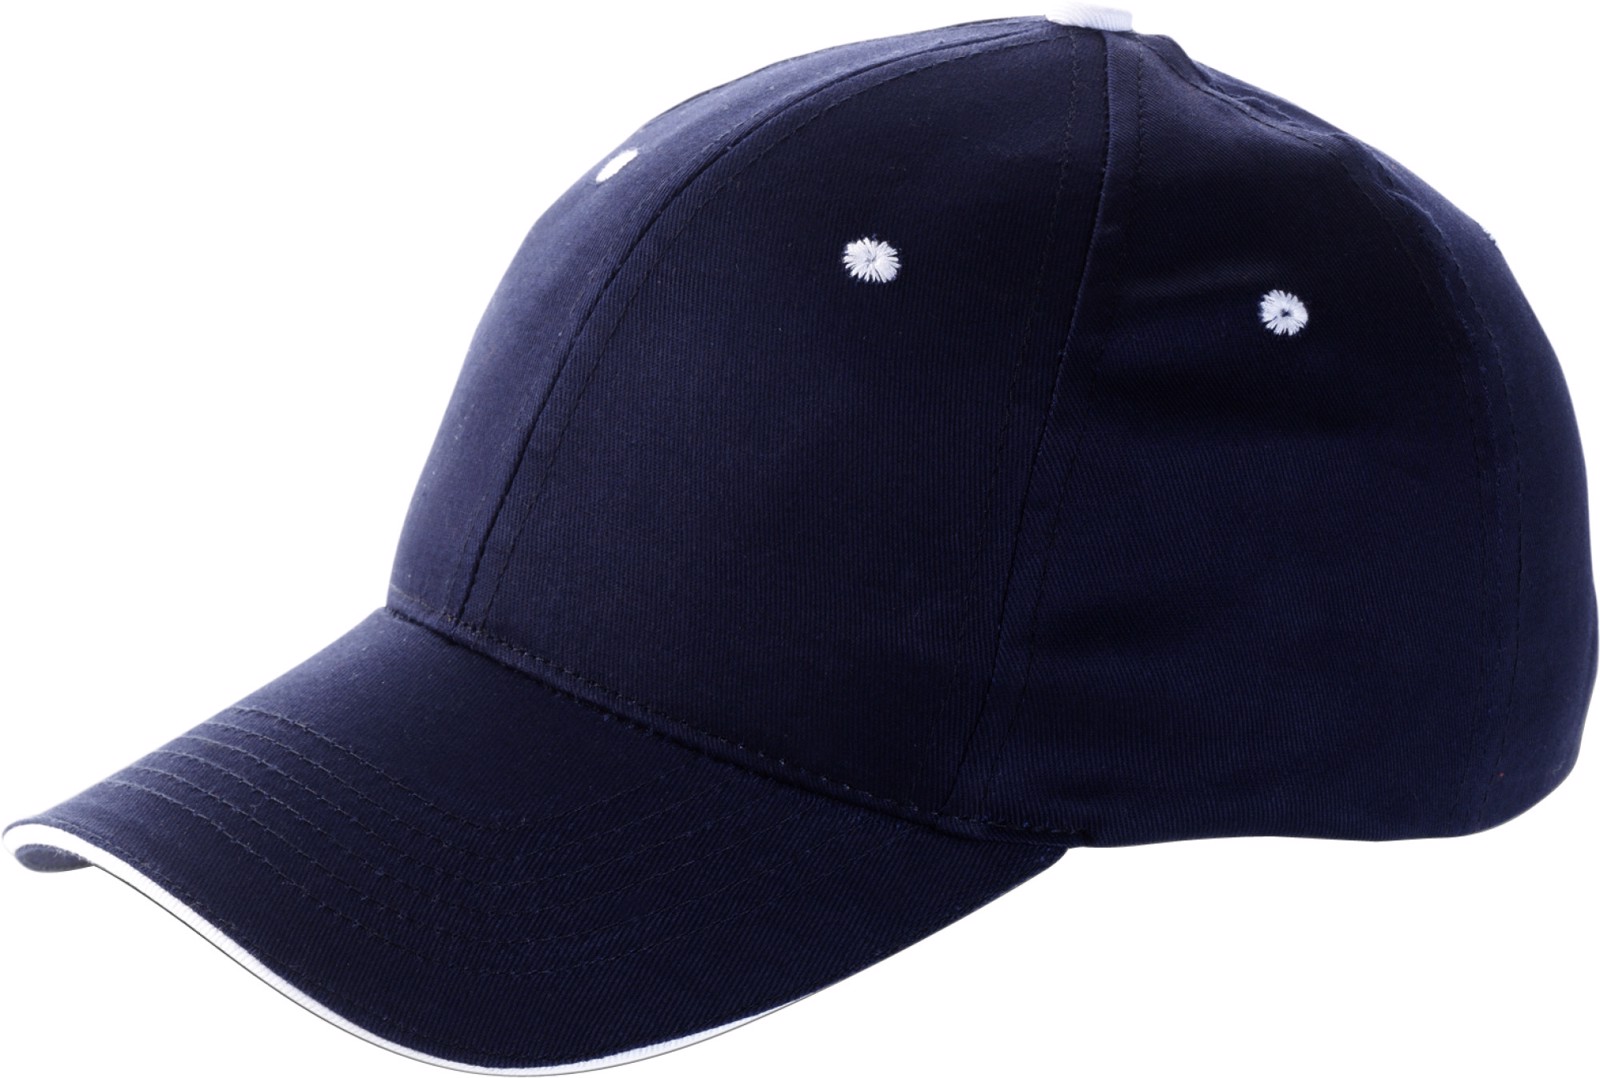 Cotton twill cap - Blue